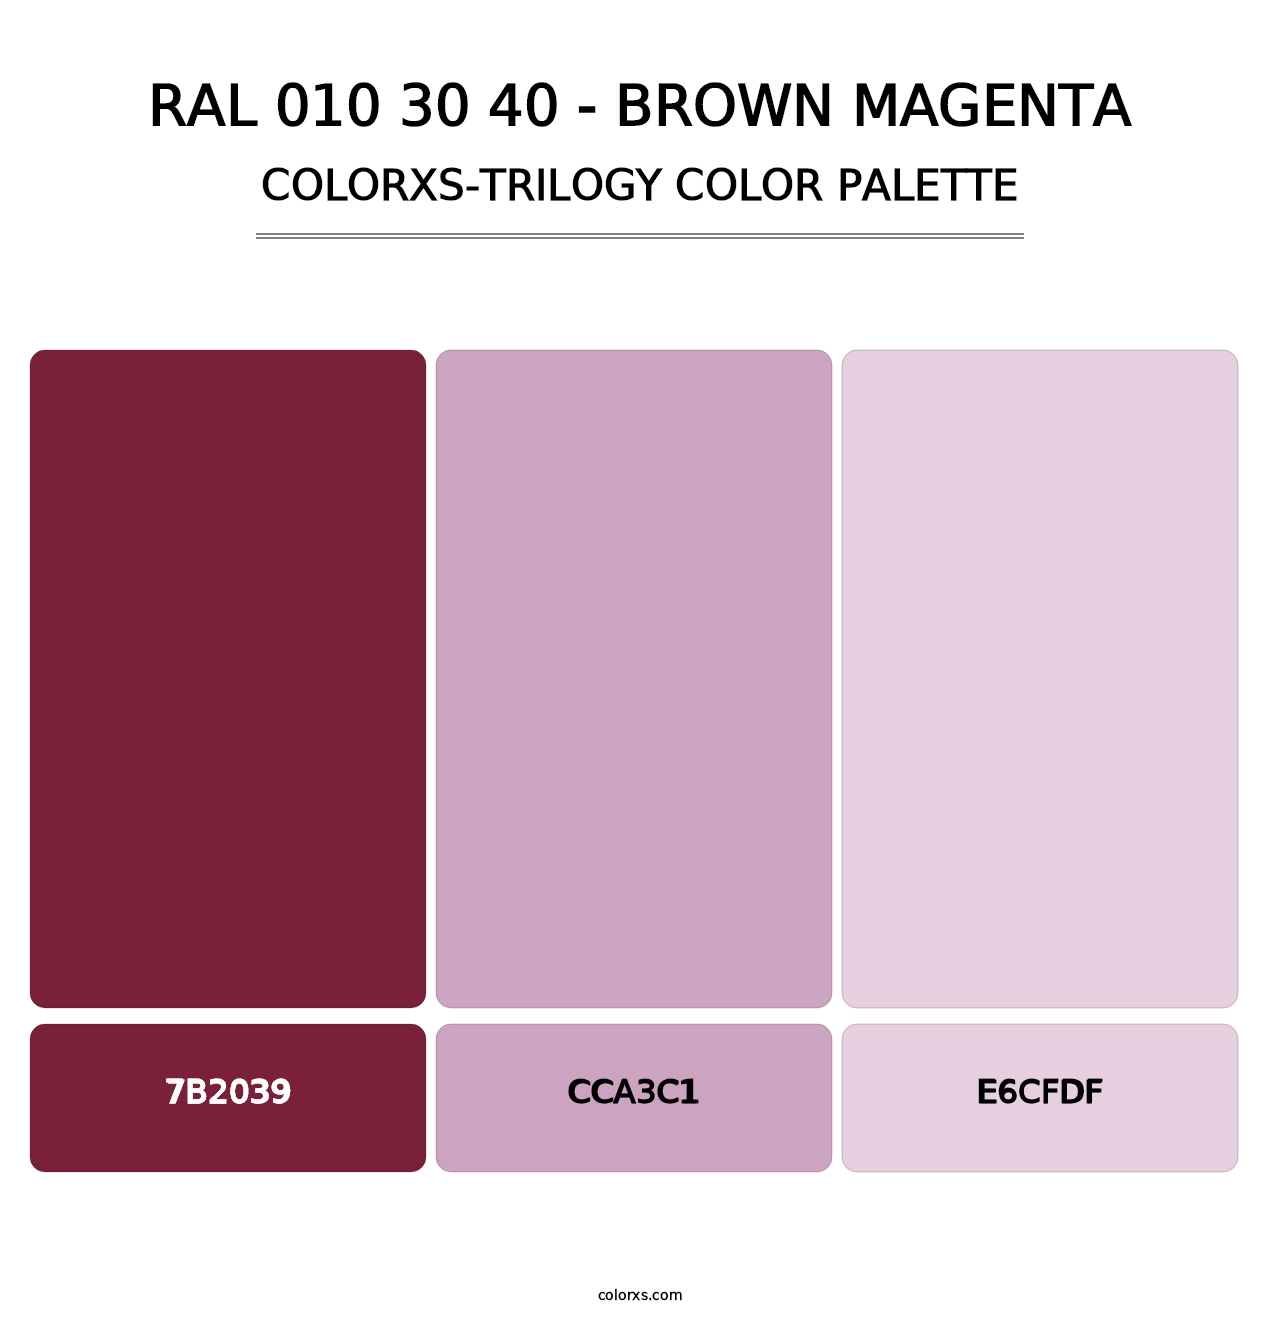 RAL 010 30 40 - Brown Magenta - Colorxs Trilogy Palette